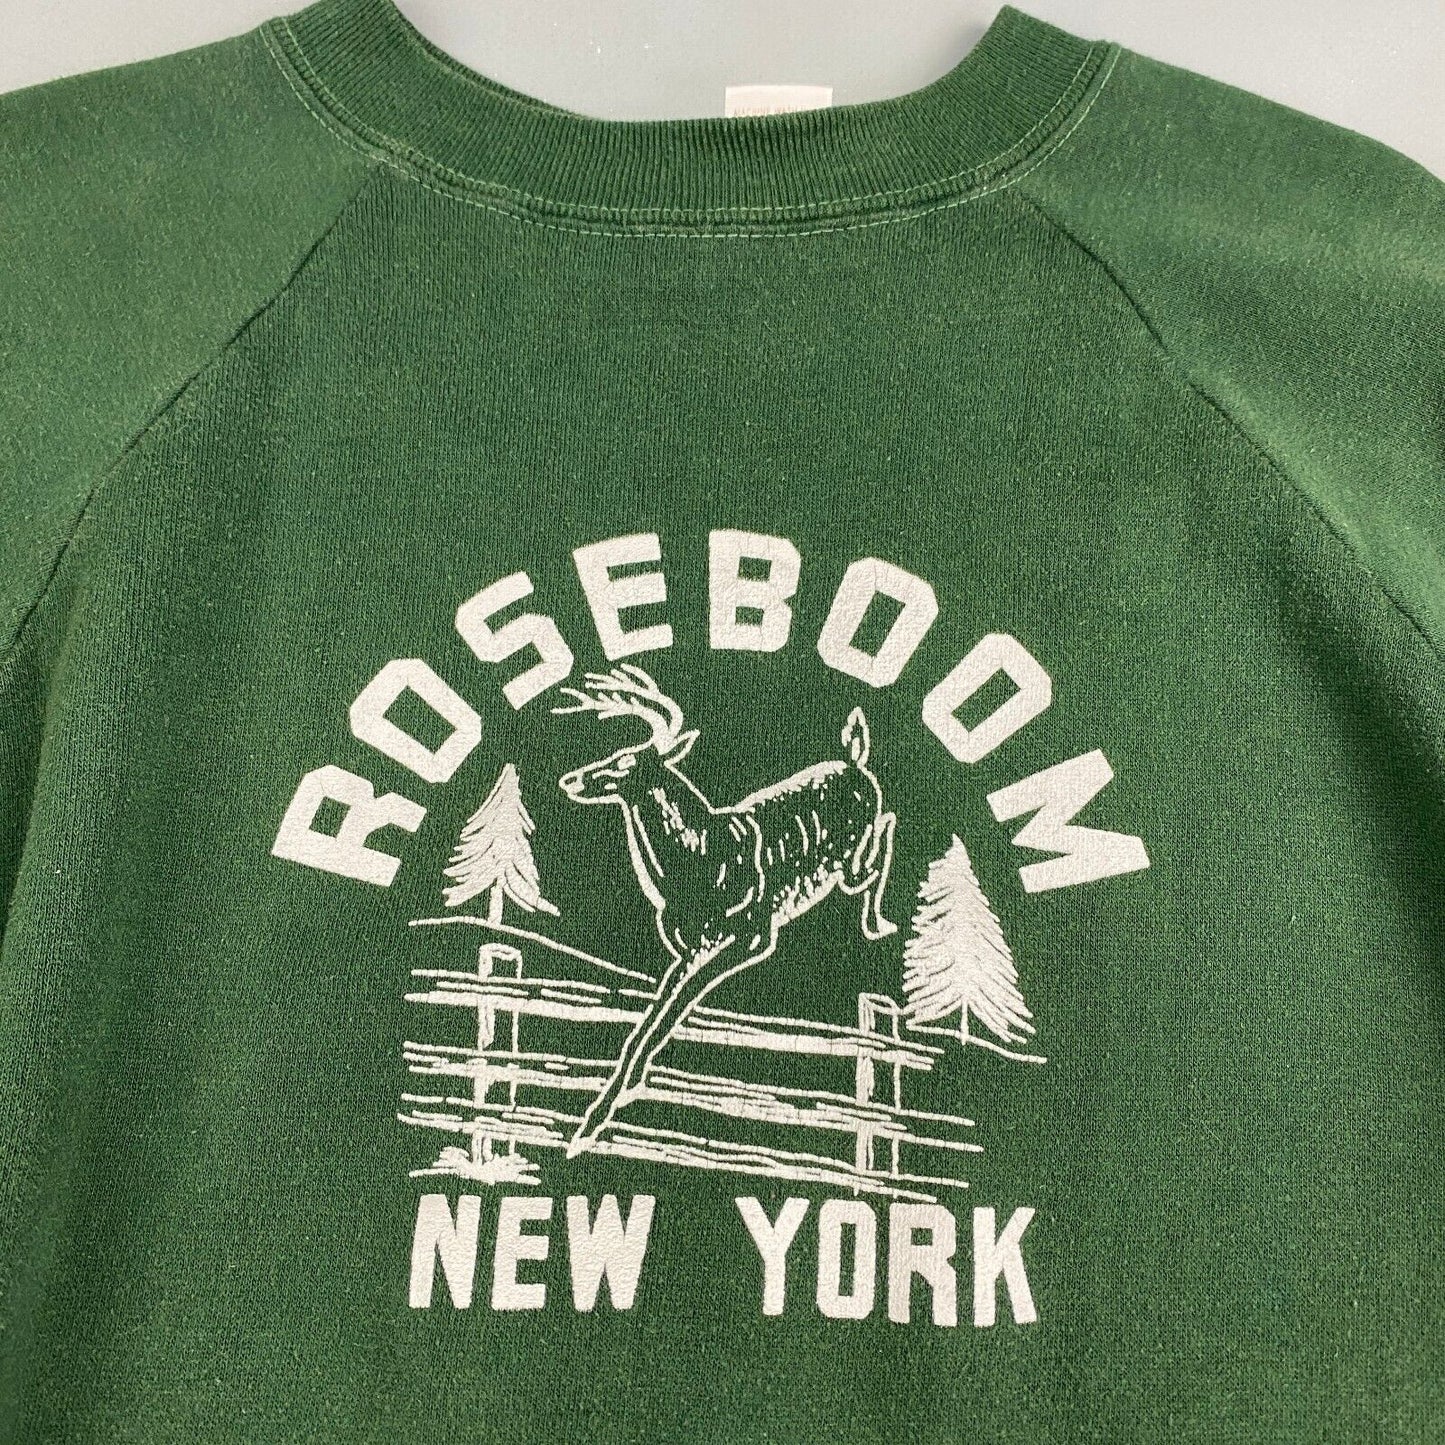 VINTAGE 70s/80s Roseboom New York Crewneck Sweater sz Large Adult Men